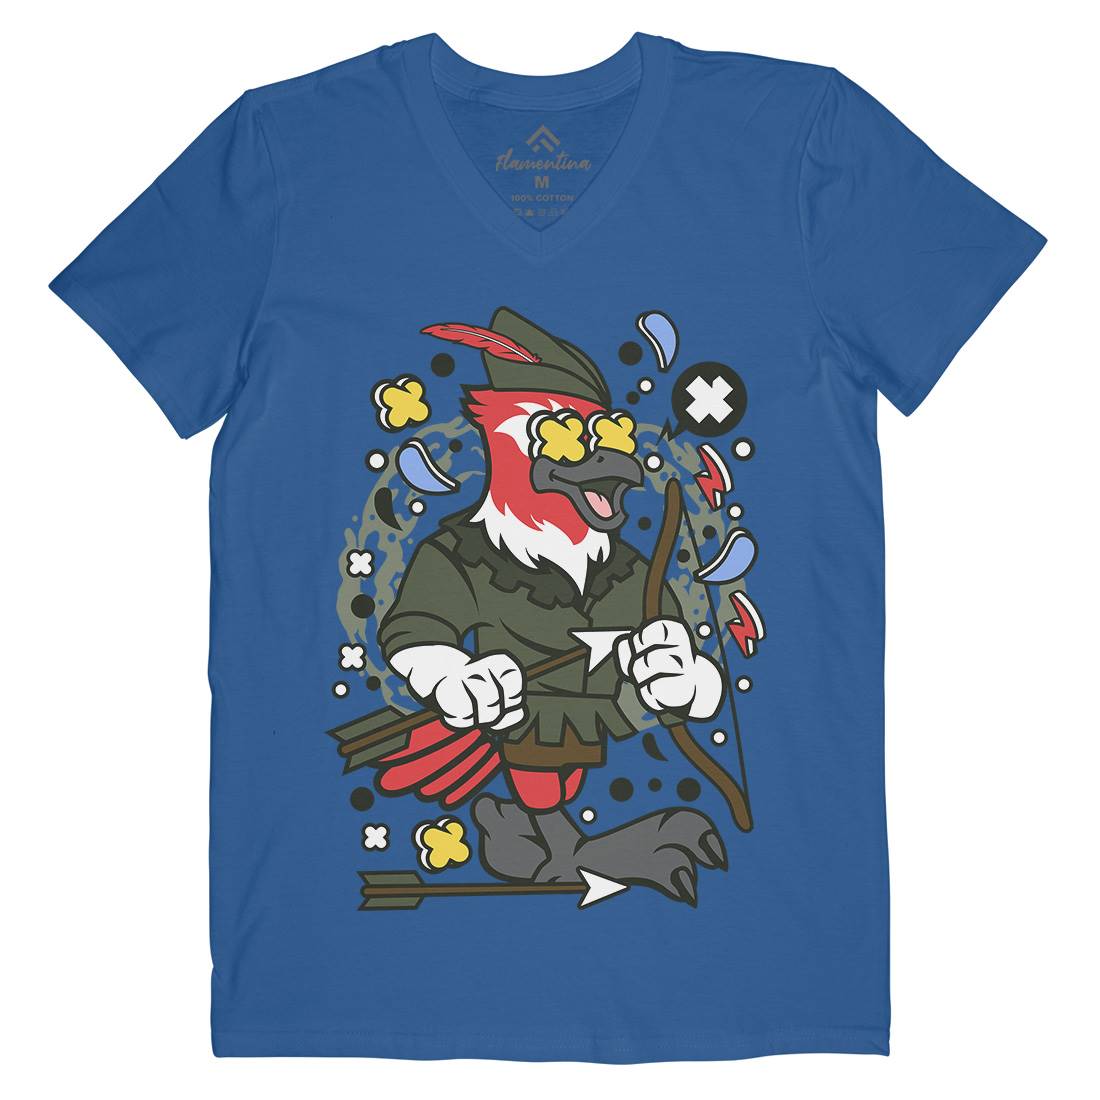 Bird Robin Hood Mens V-Neck T-Shirt Warriors C503